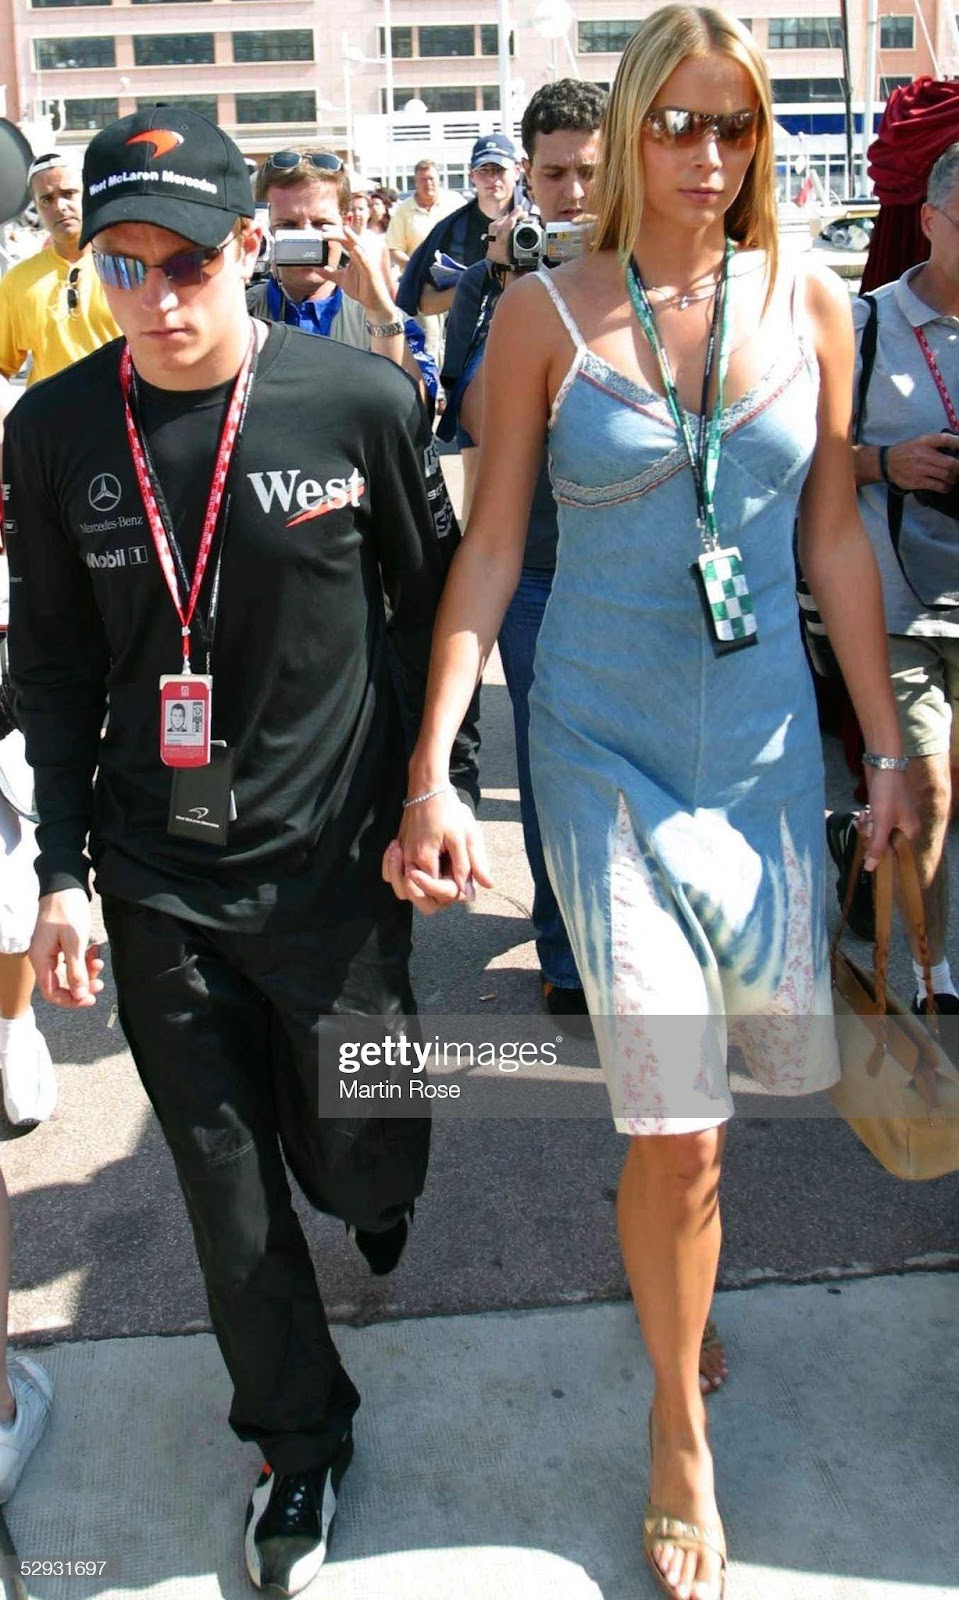 Kimi Raikkonen, McLaren Mercedes, with his girlfriend Jenni Dahlmann at the 2003 Monaco Grand Prix in Monte Carlo.